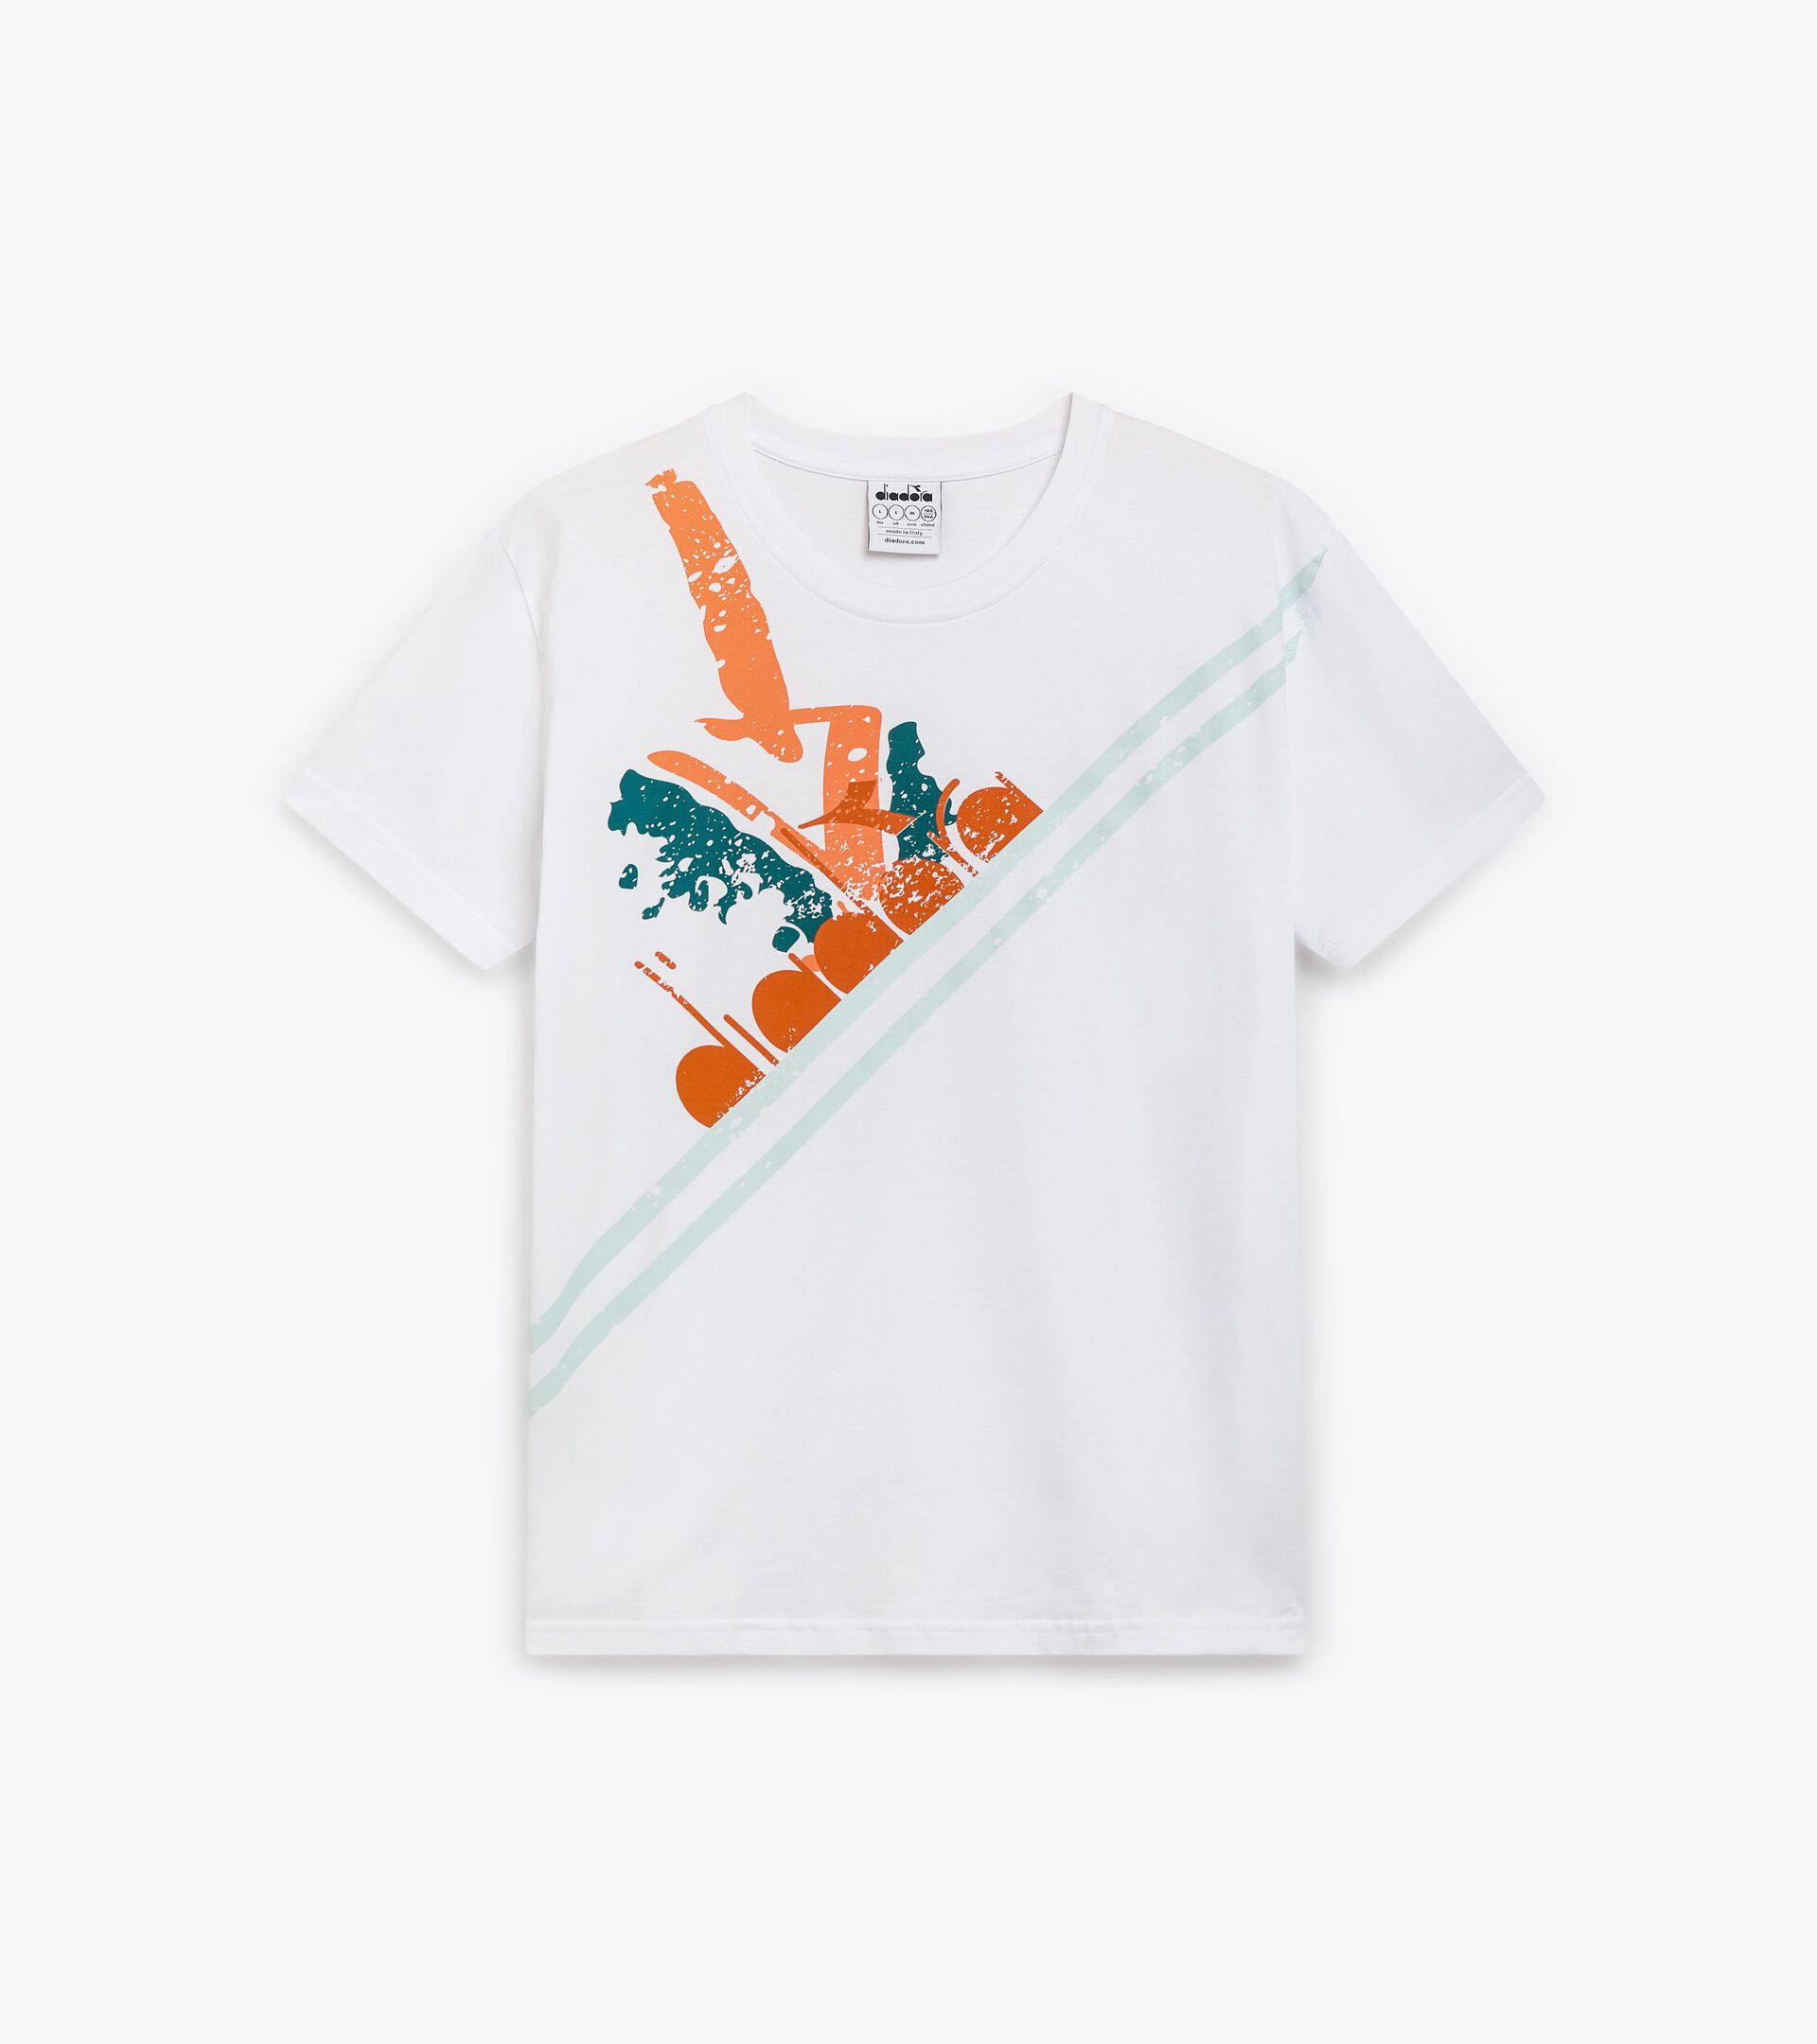 90s-inspired t-shirt - Made in Italy - Men’s T-SHIRT SS TENNIS 90 CARROT ORANGE - Diadora